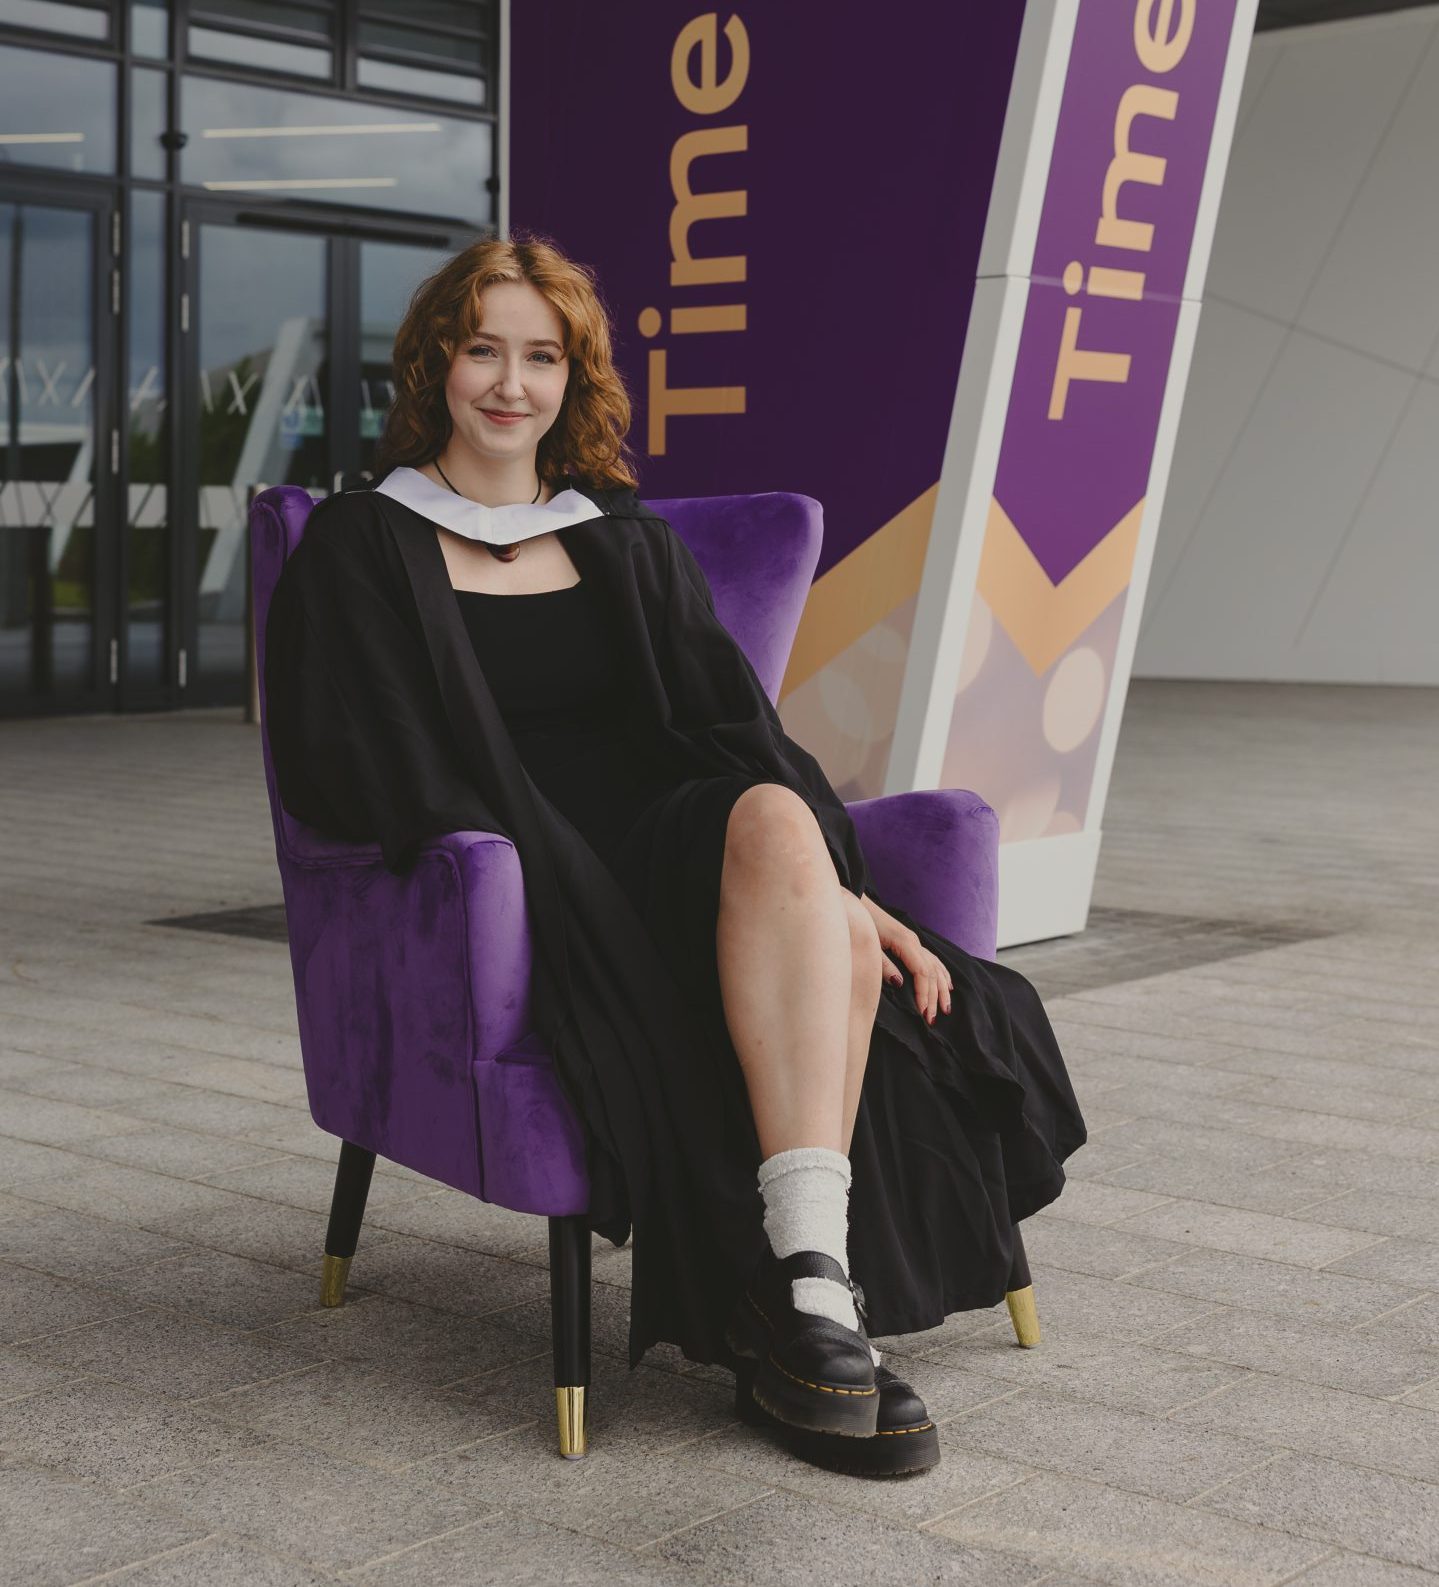 Shetland RGU graduate on a purple armchair outside the campus